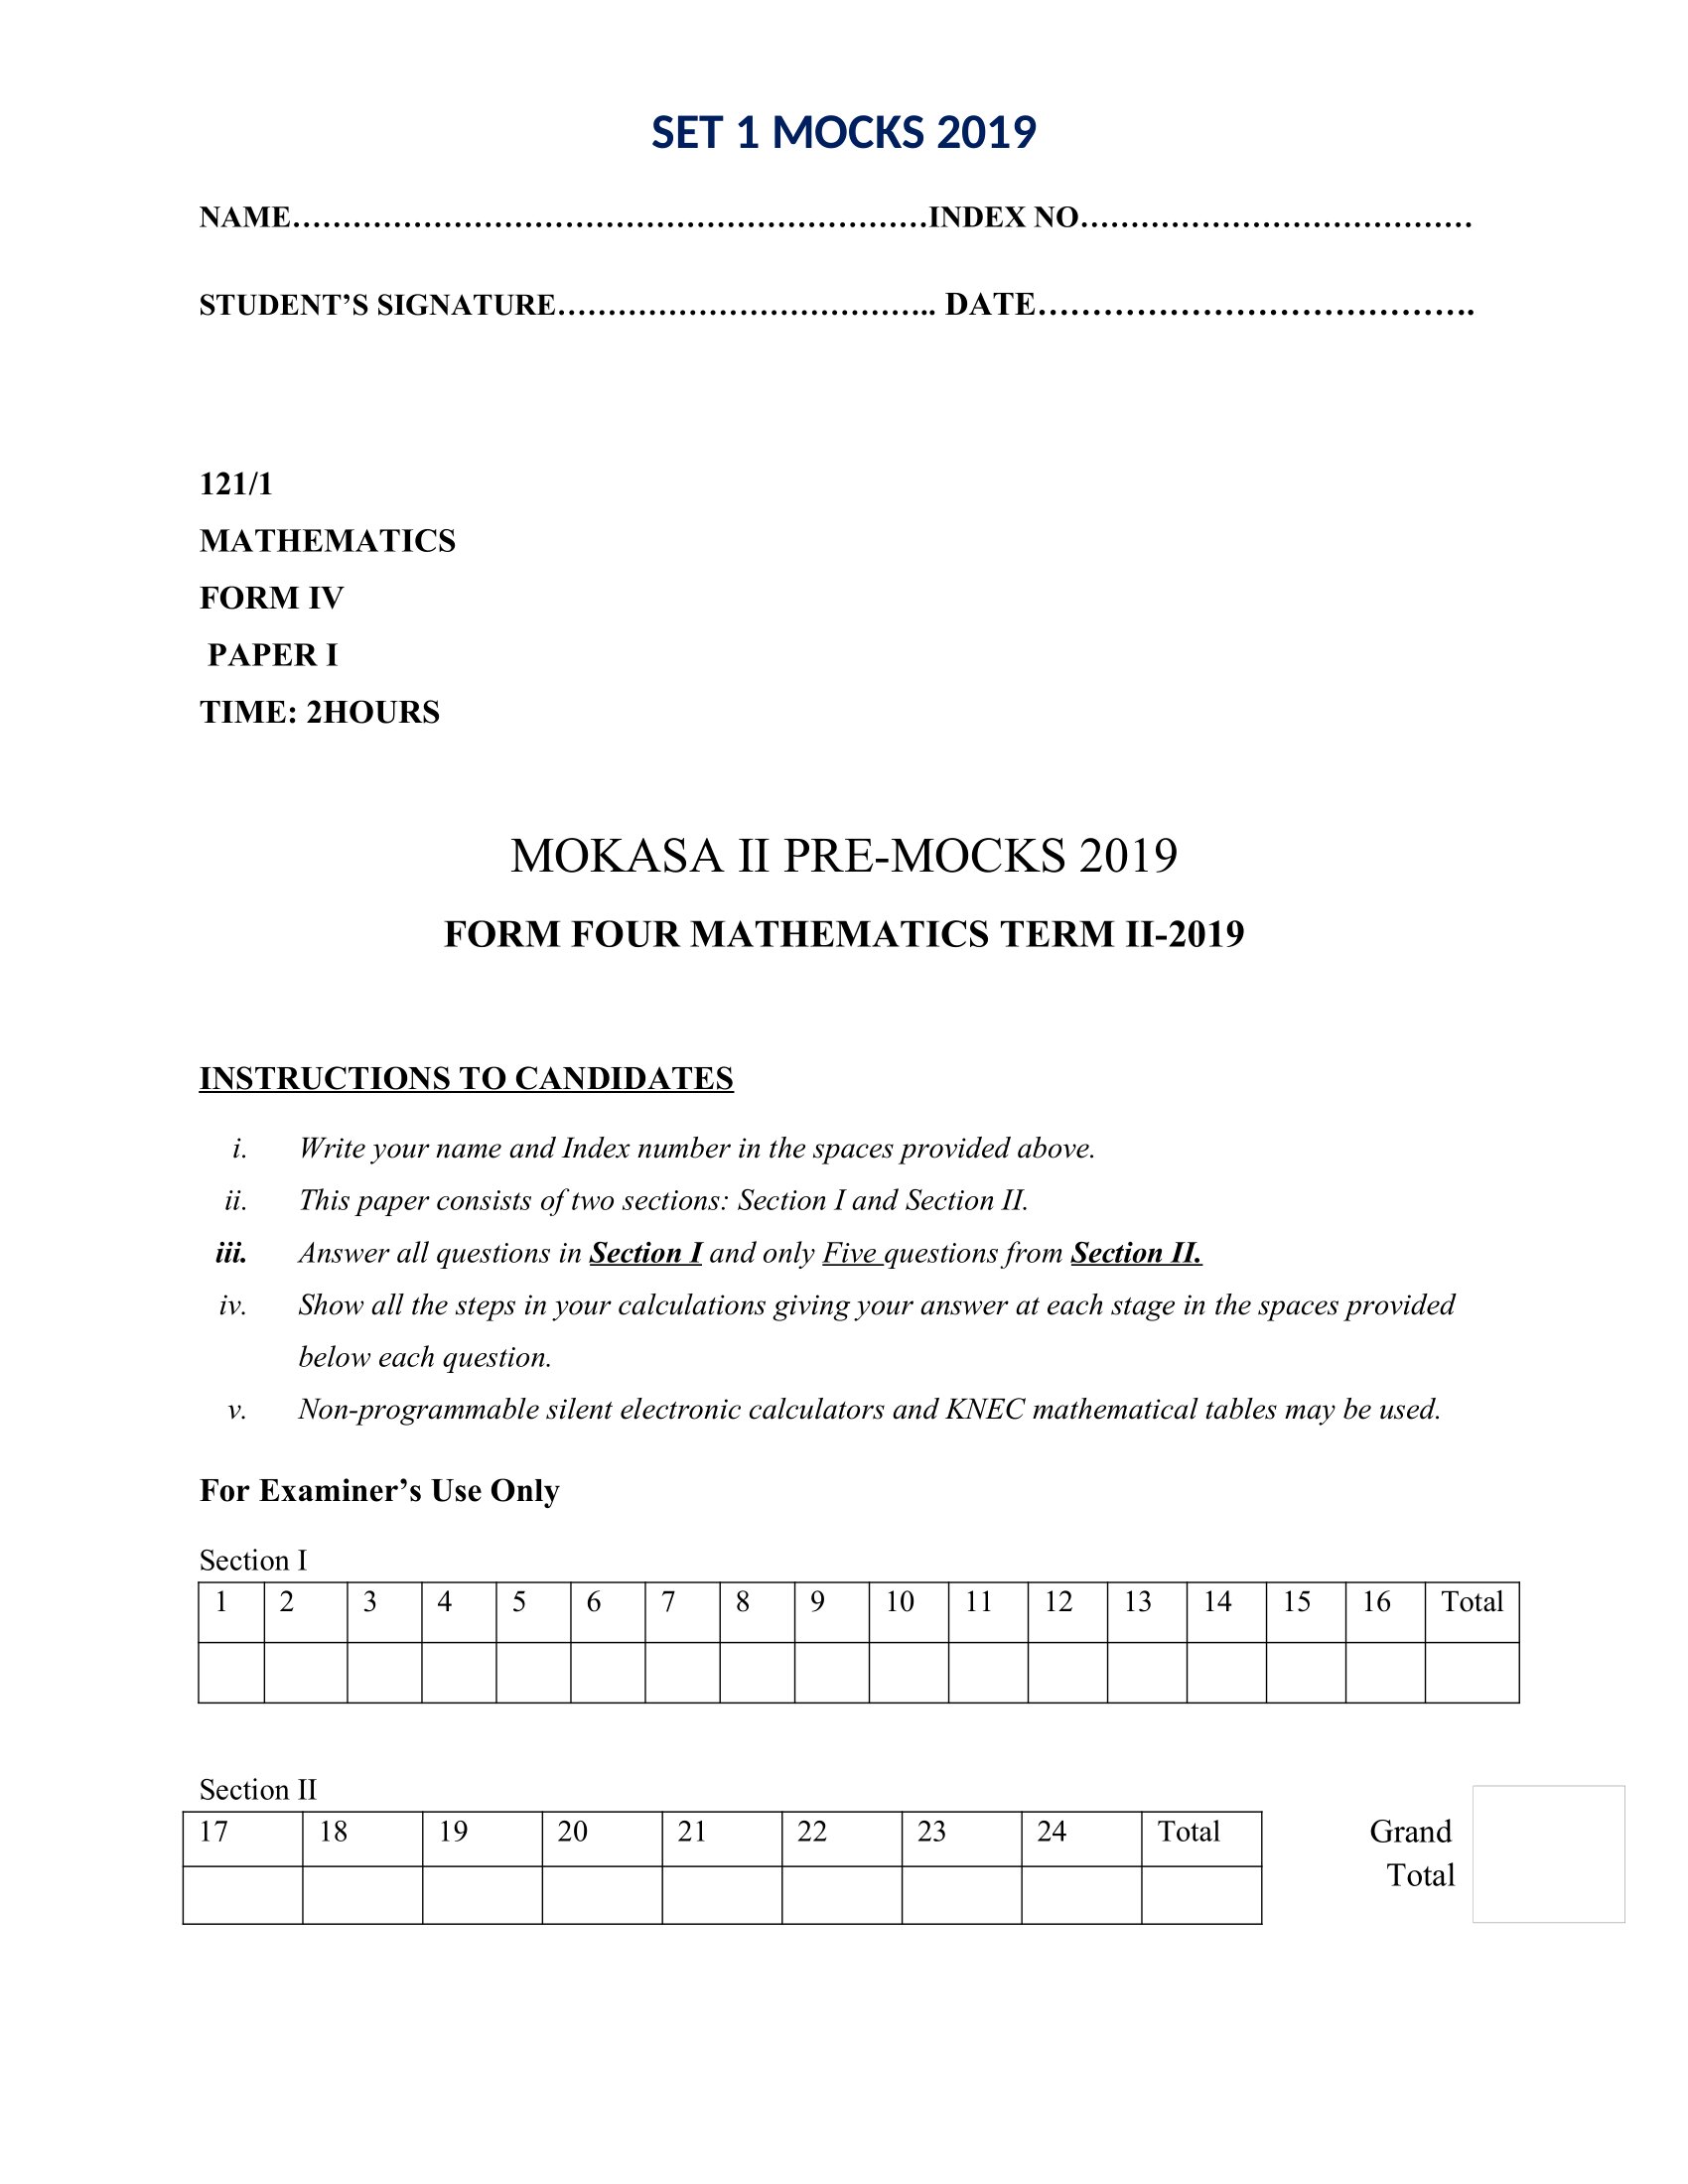 Mathematics Paper 1 Mokasa Pre-Mock 2019